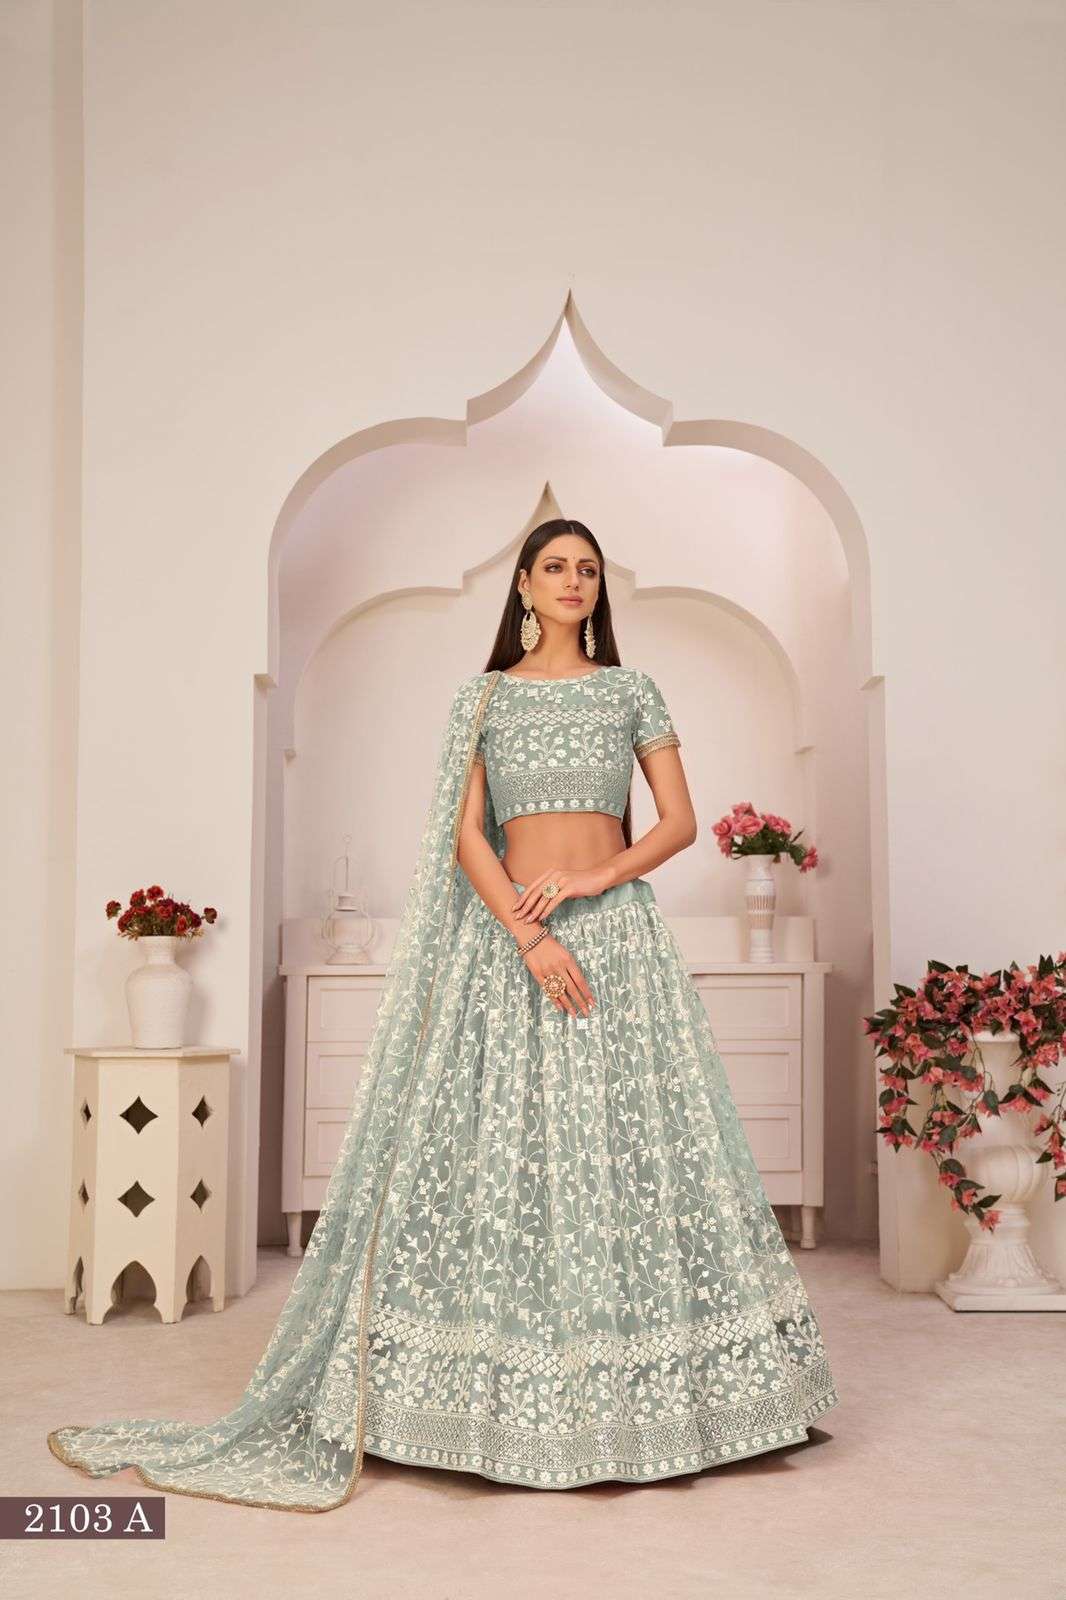 Kelaya 2103 Colours By Narayani Fashion House 2103 To 2103-C Series Indian Traditional Beautiful Stylish Designer Banarasi Silk Jacquard Embroidered Party Wear Mono Net Lehengas At Wholesale Price